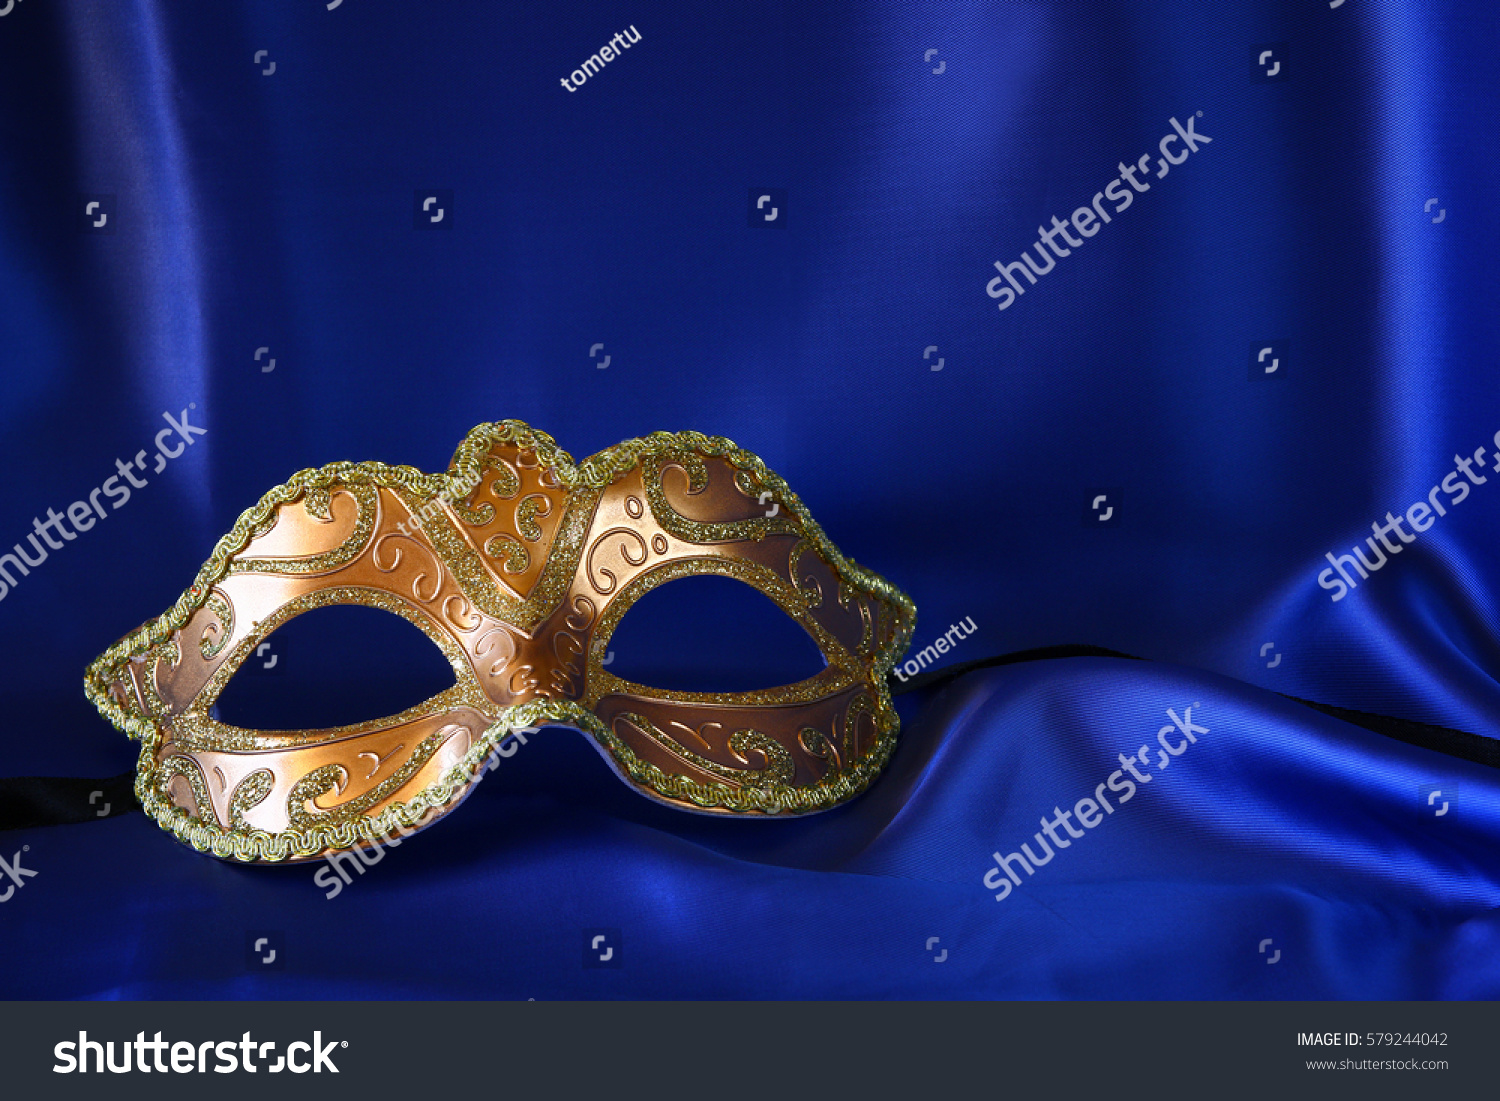 Image of elegant gold venetian mask on blue silk background #579244042